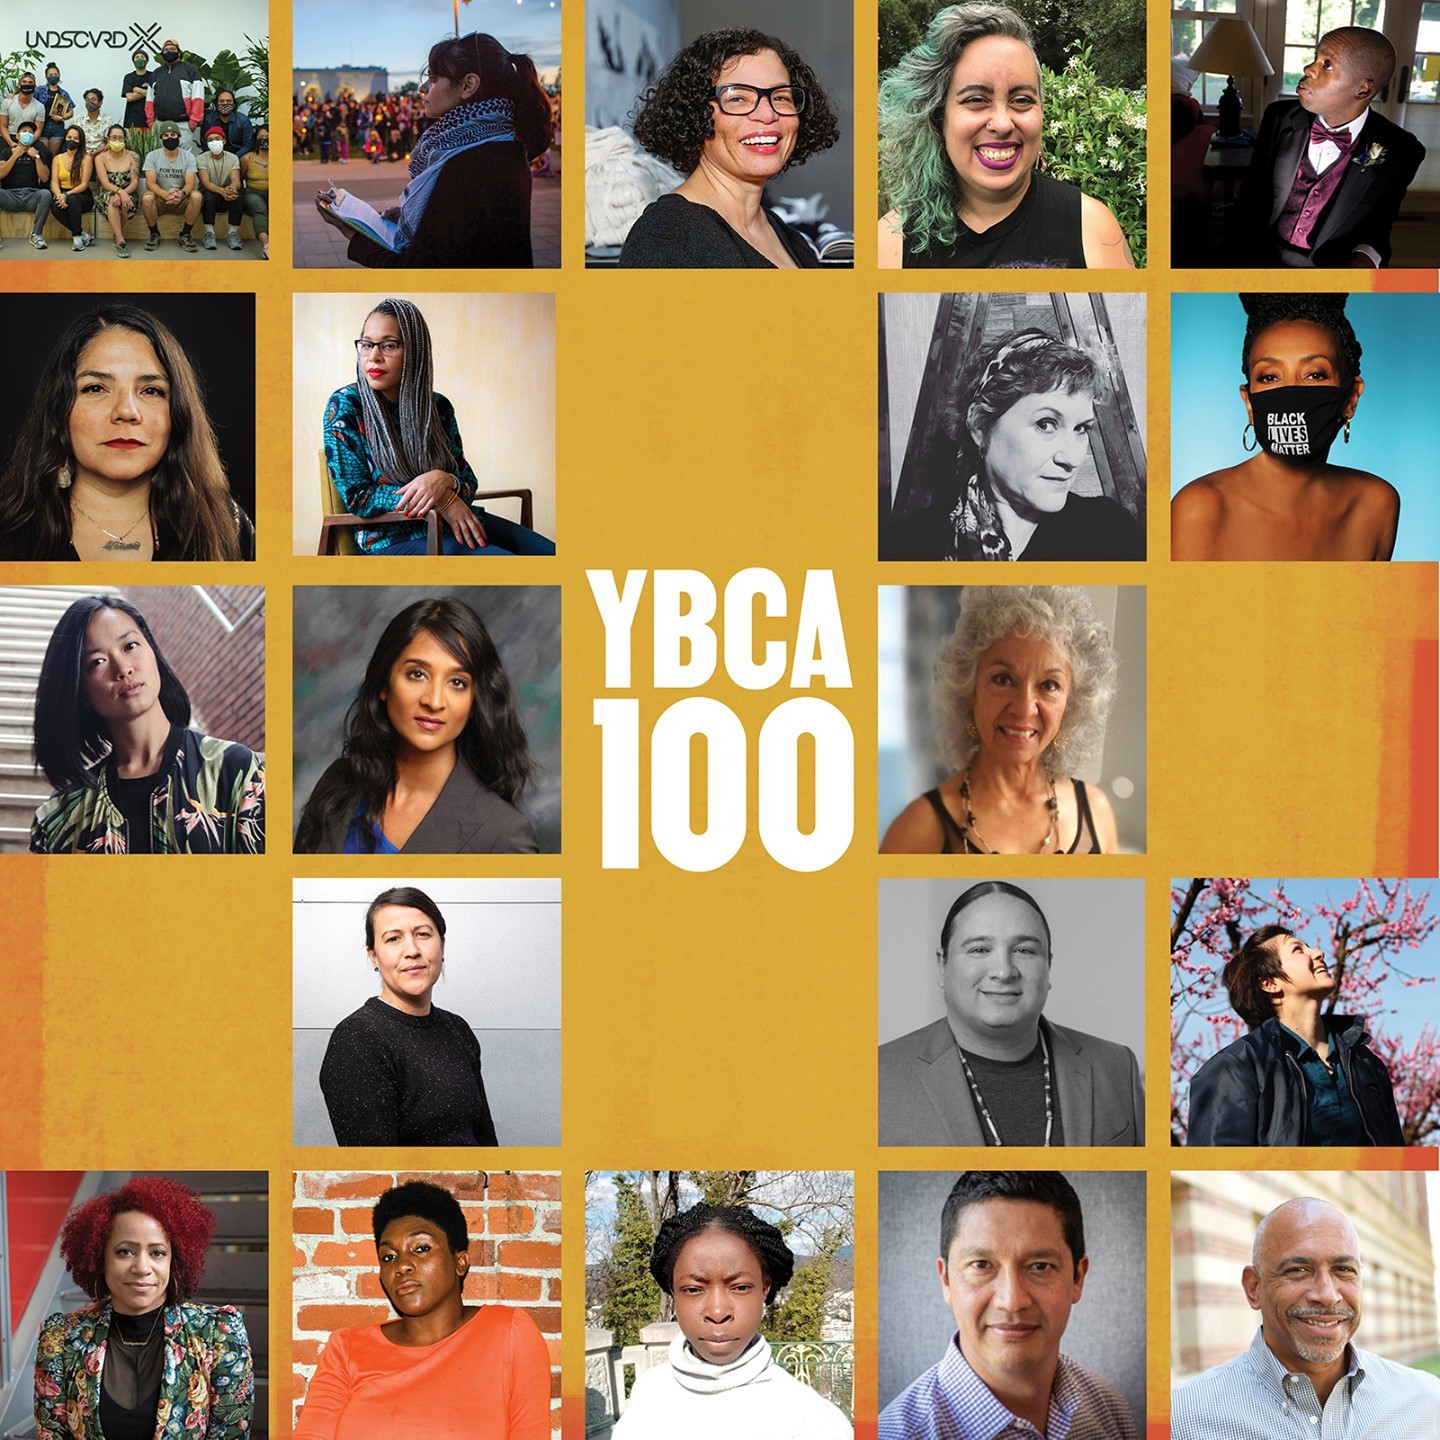 YBCA 100 awards image